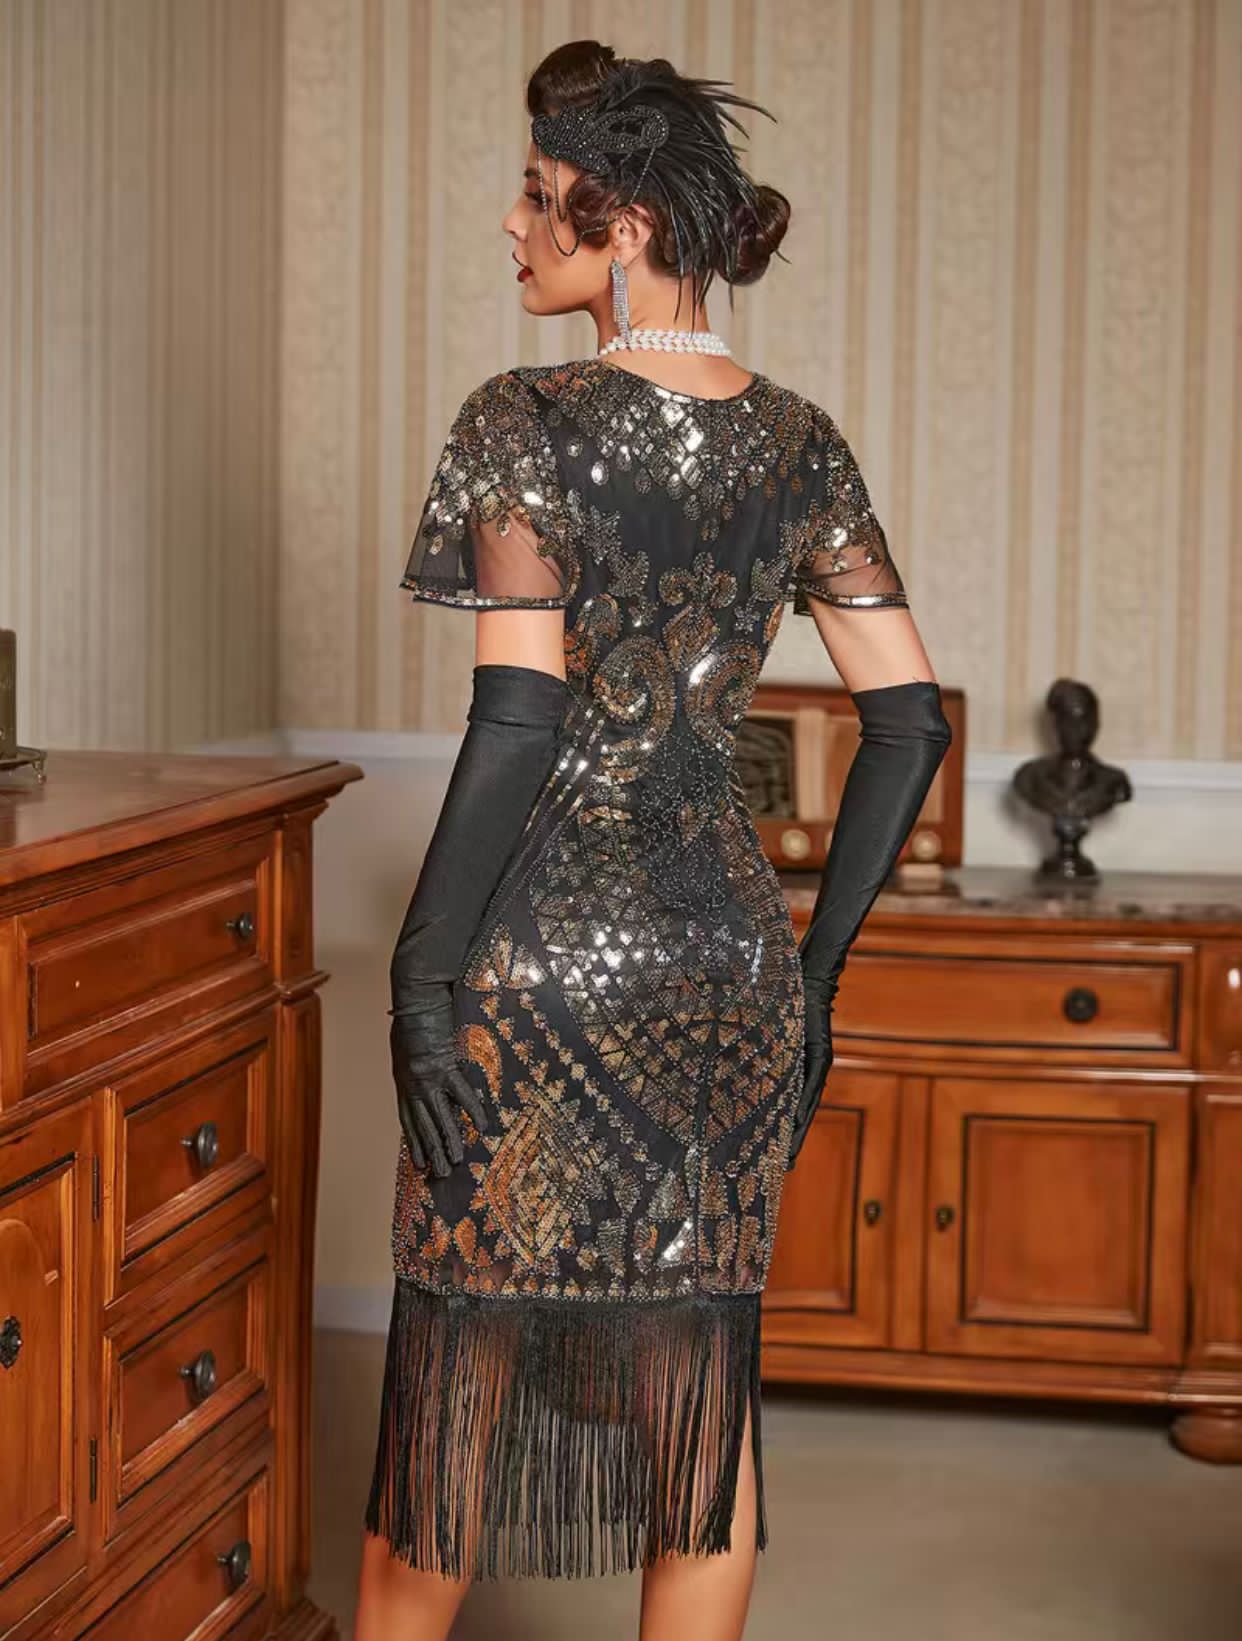 The Vintage Sequined Tassel Hem Dress